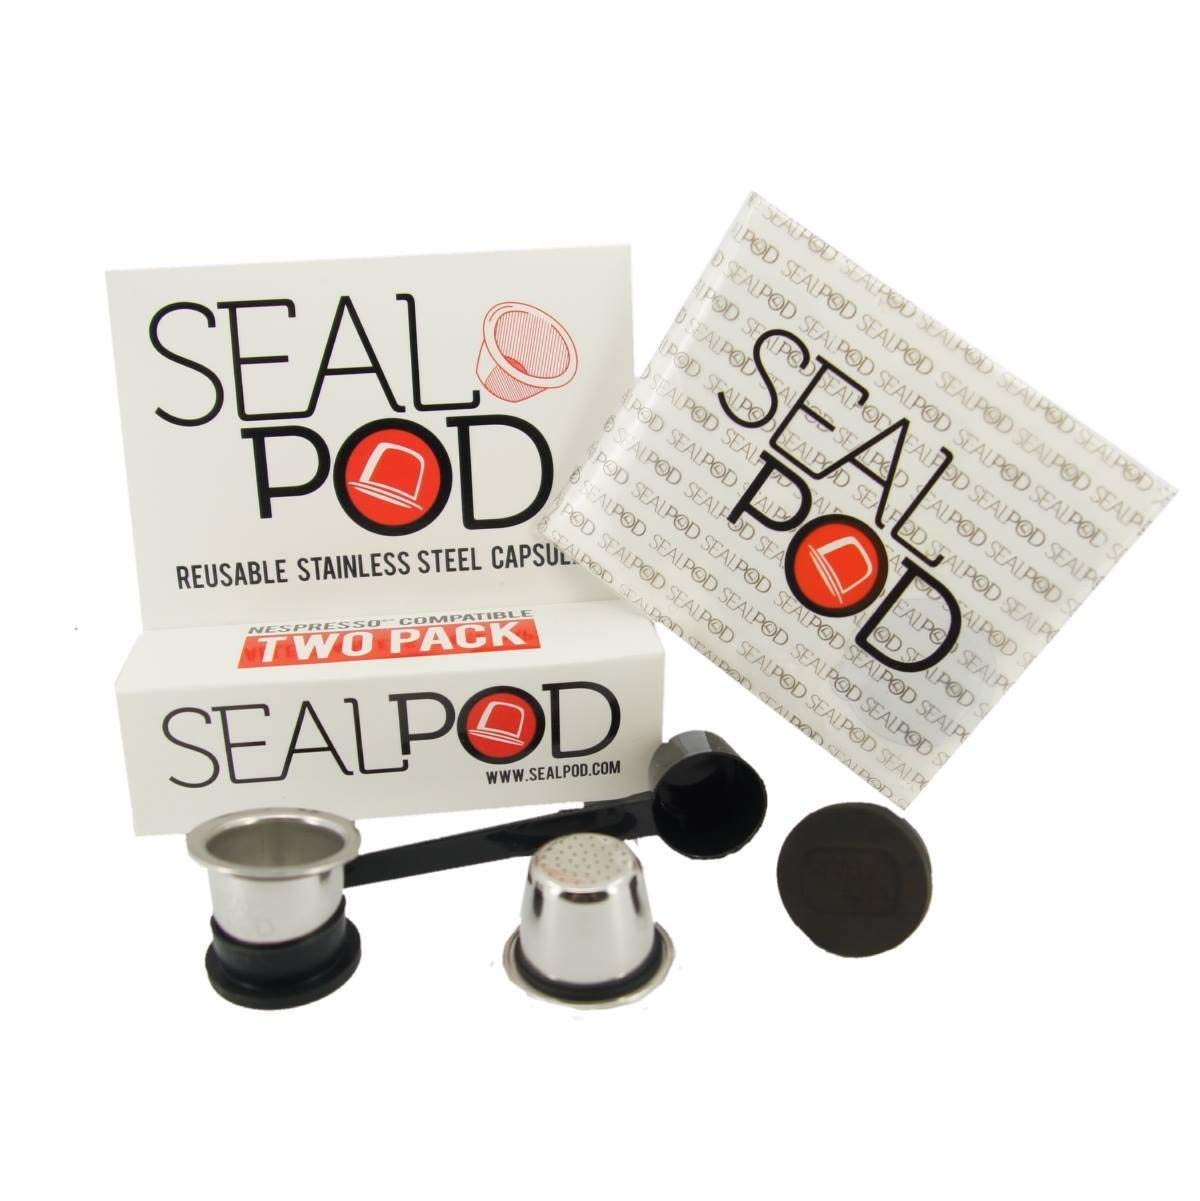 SEAL POD Reusable Nespresso Capsules